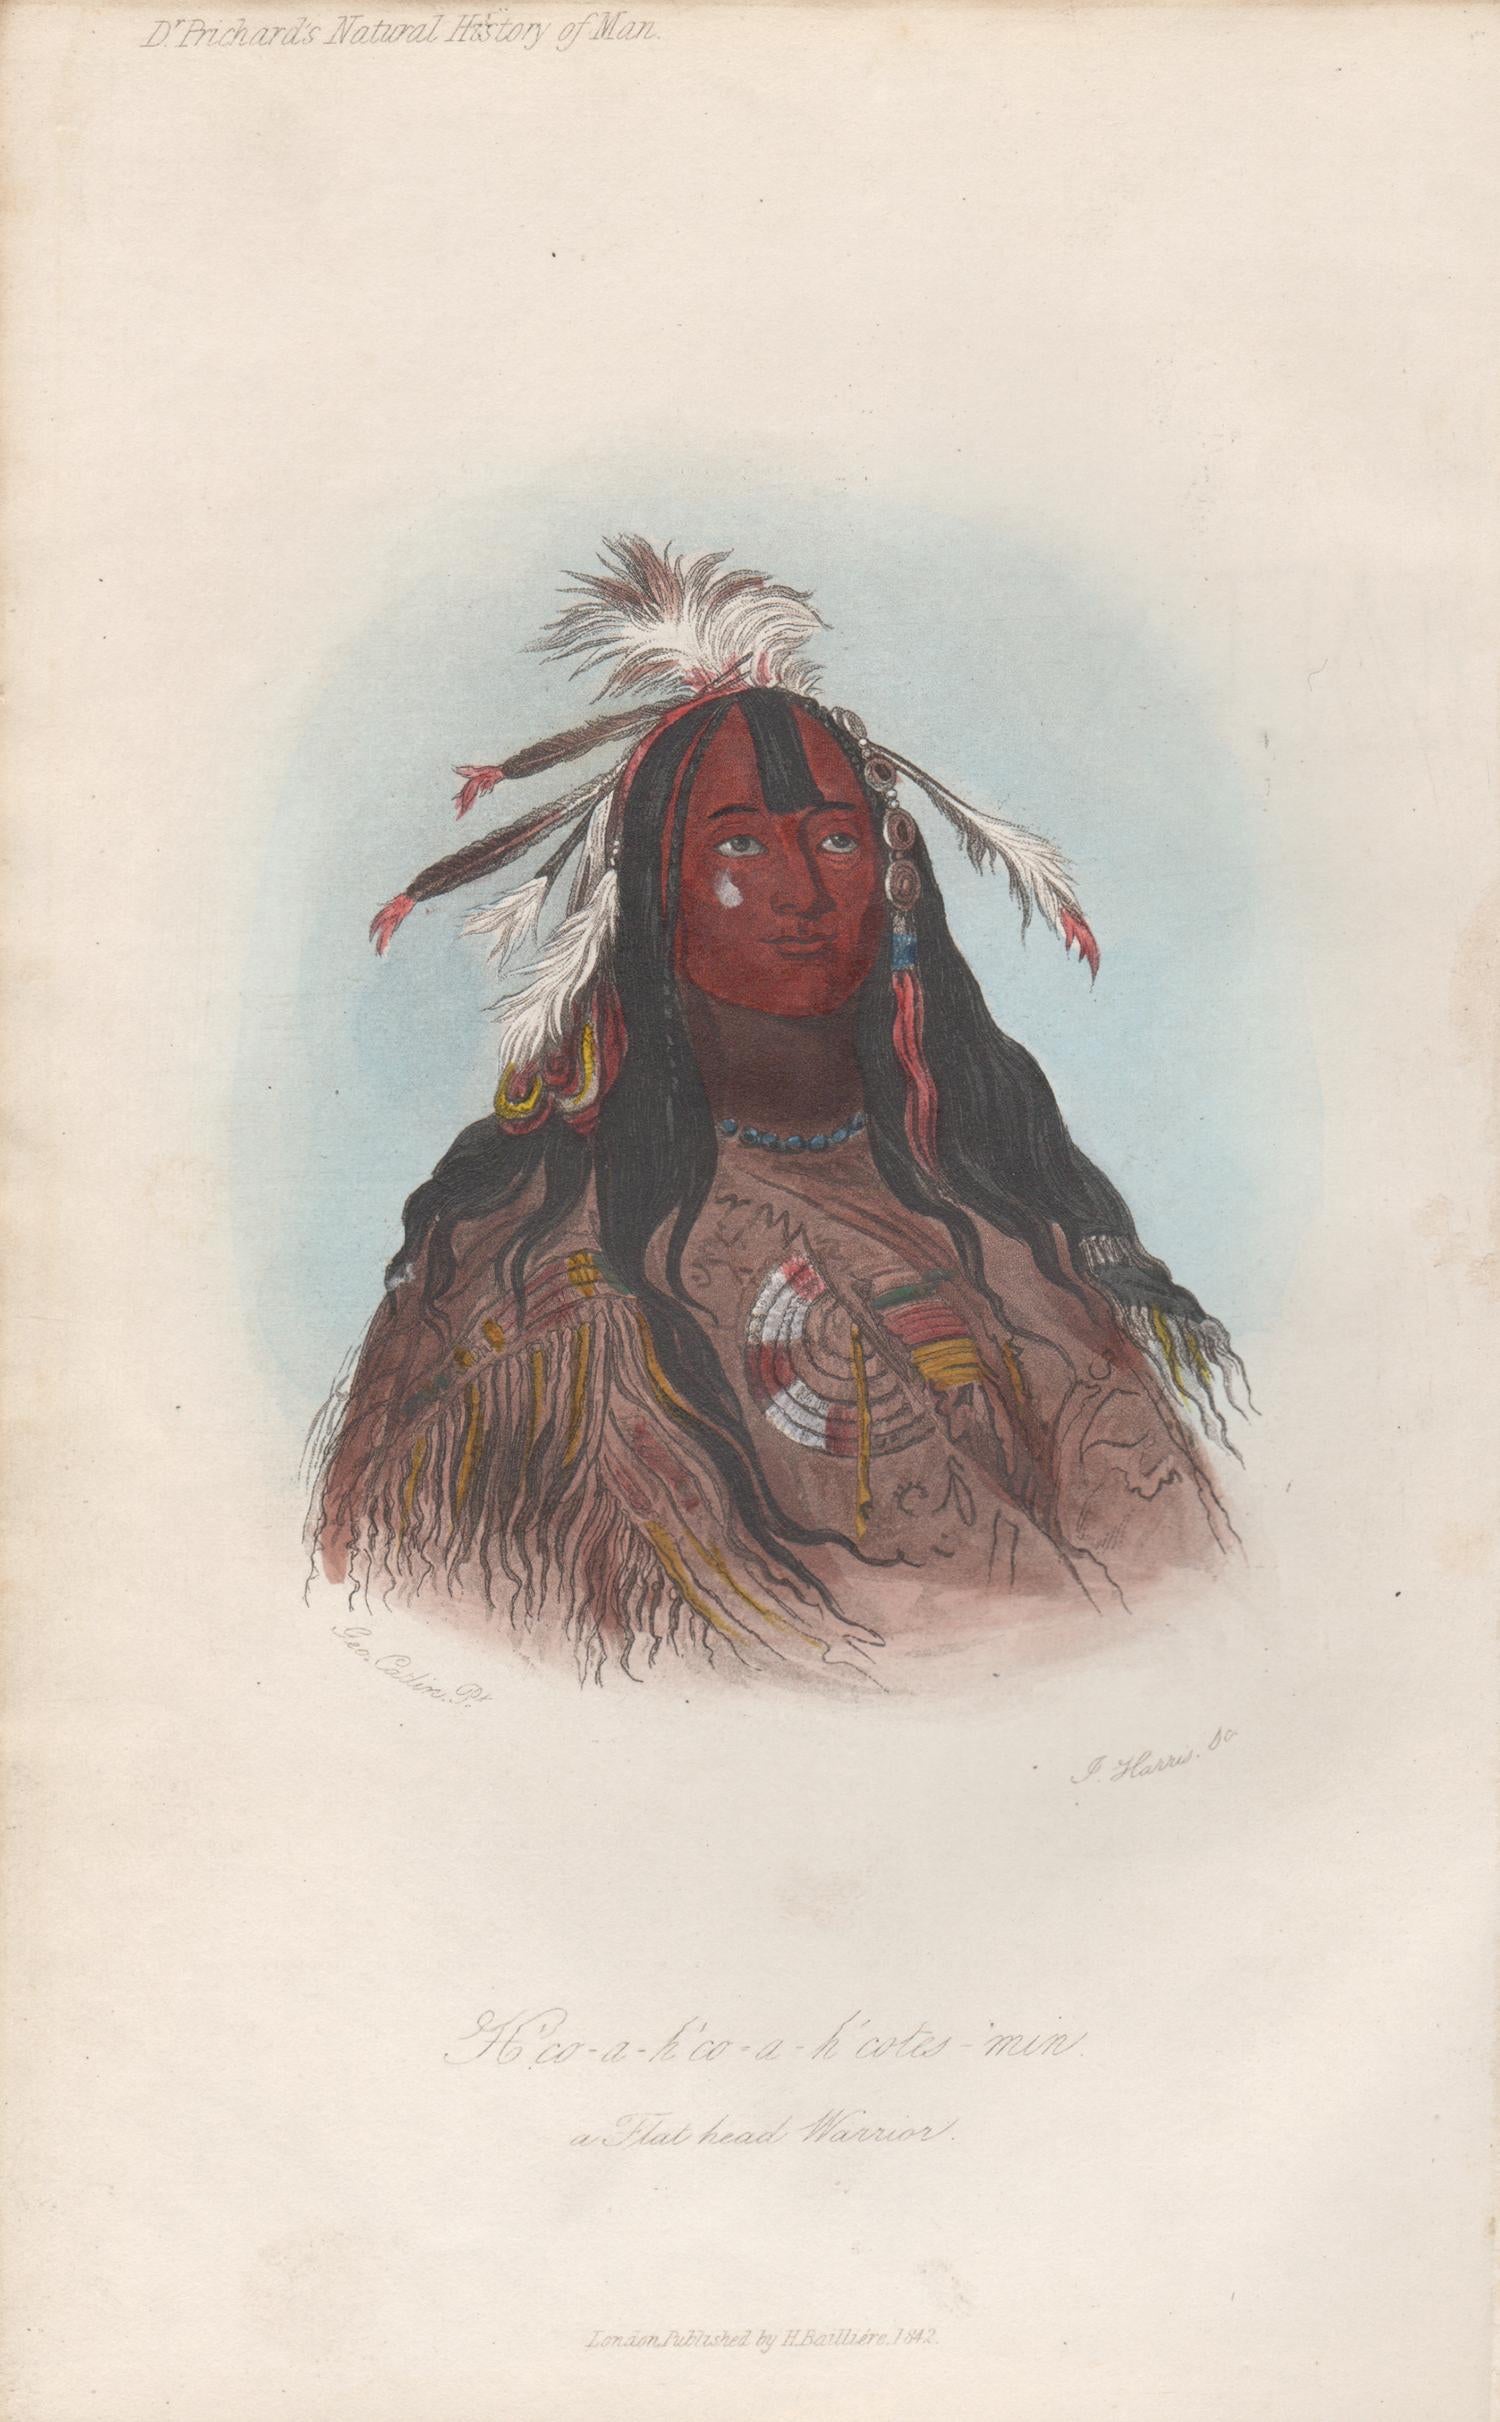 George Catlin Portrait Print - H'co-a-h'co-a-cotes-min - A Flat Head Warrior Native American portrait engraving